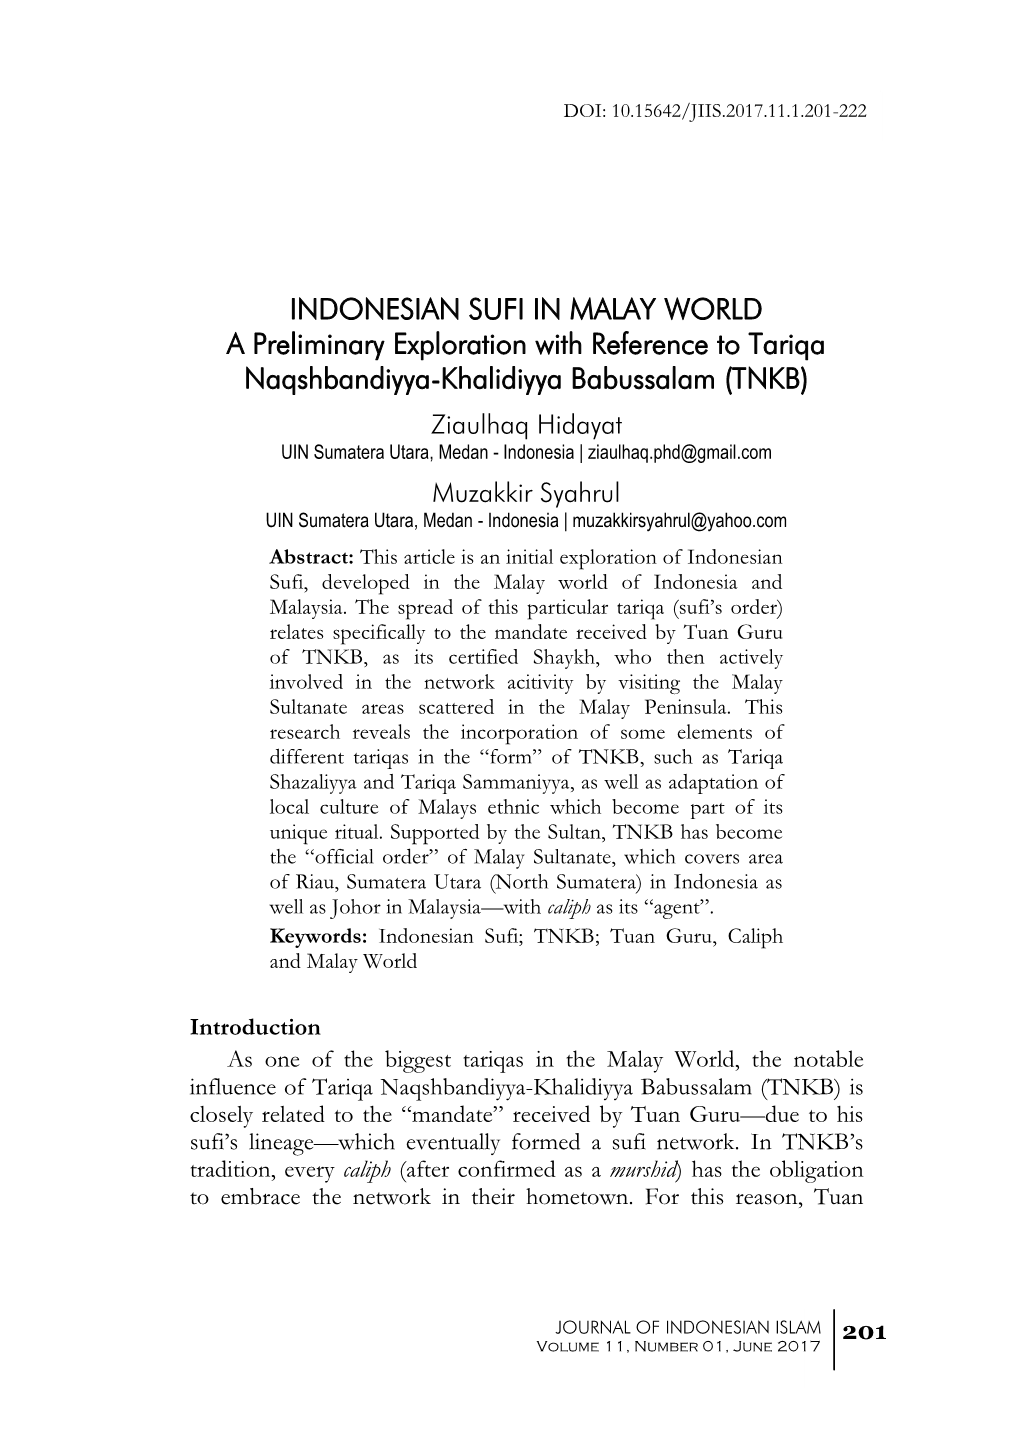 INDONESIAN SUFI in MALAY WORLD a Preliminary Exploration with Reference to Tariqa Naqshbandiyya-Khalidiyya Babussalam